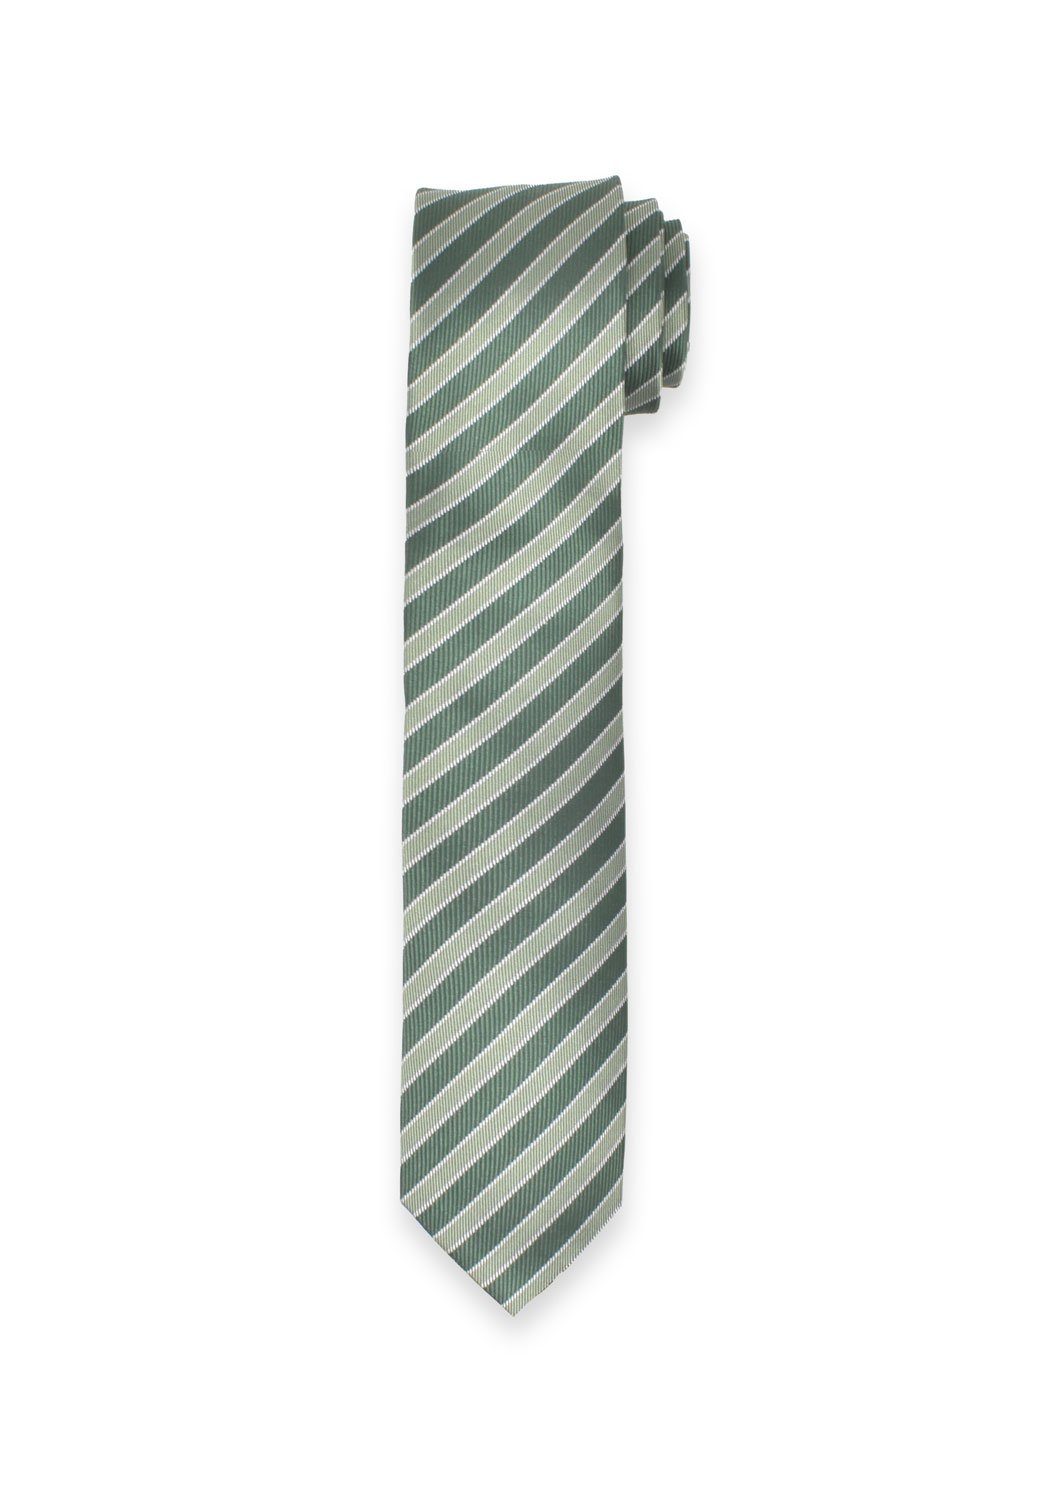 MARVELIS Krawatte Krawatte - Gestreift - Hellgrün/Dunkelgrün - 6,5 cm